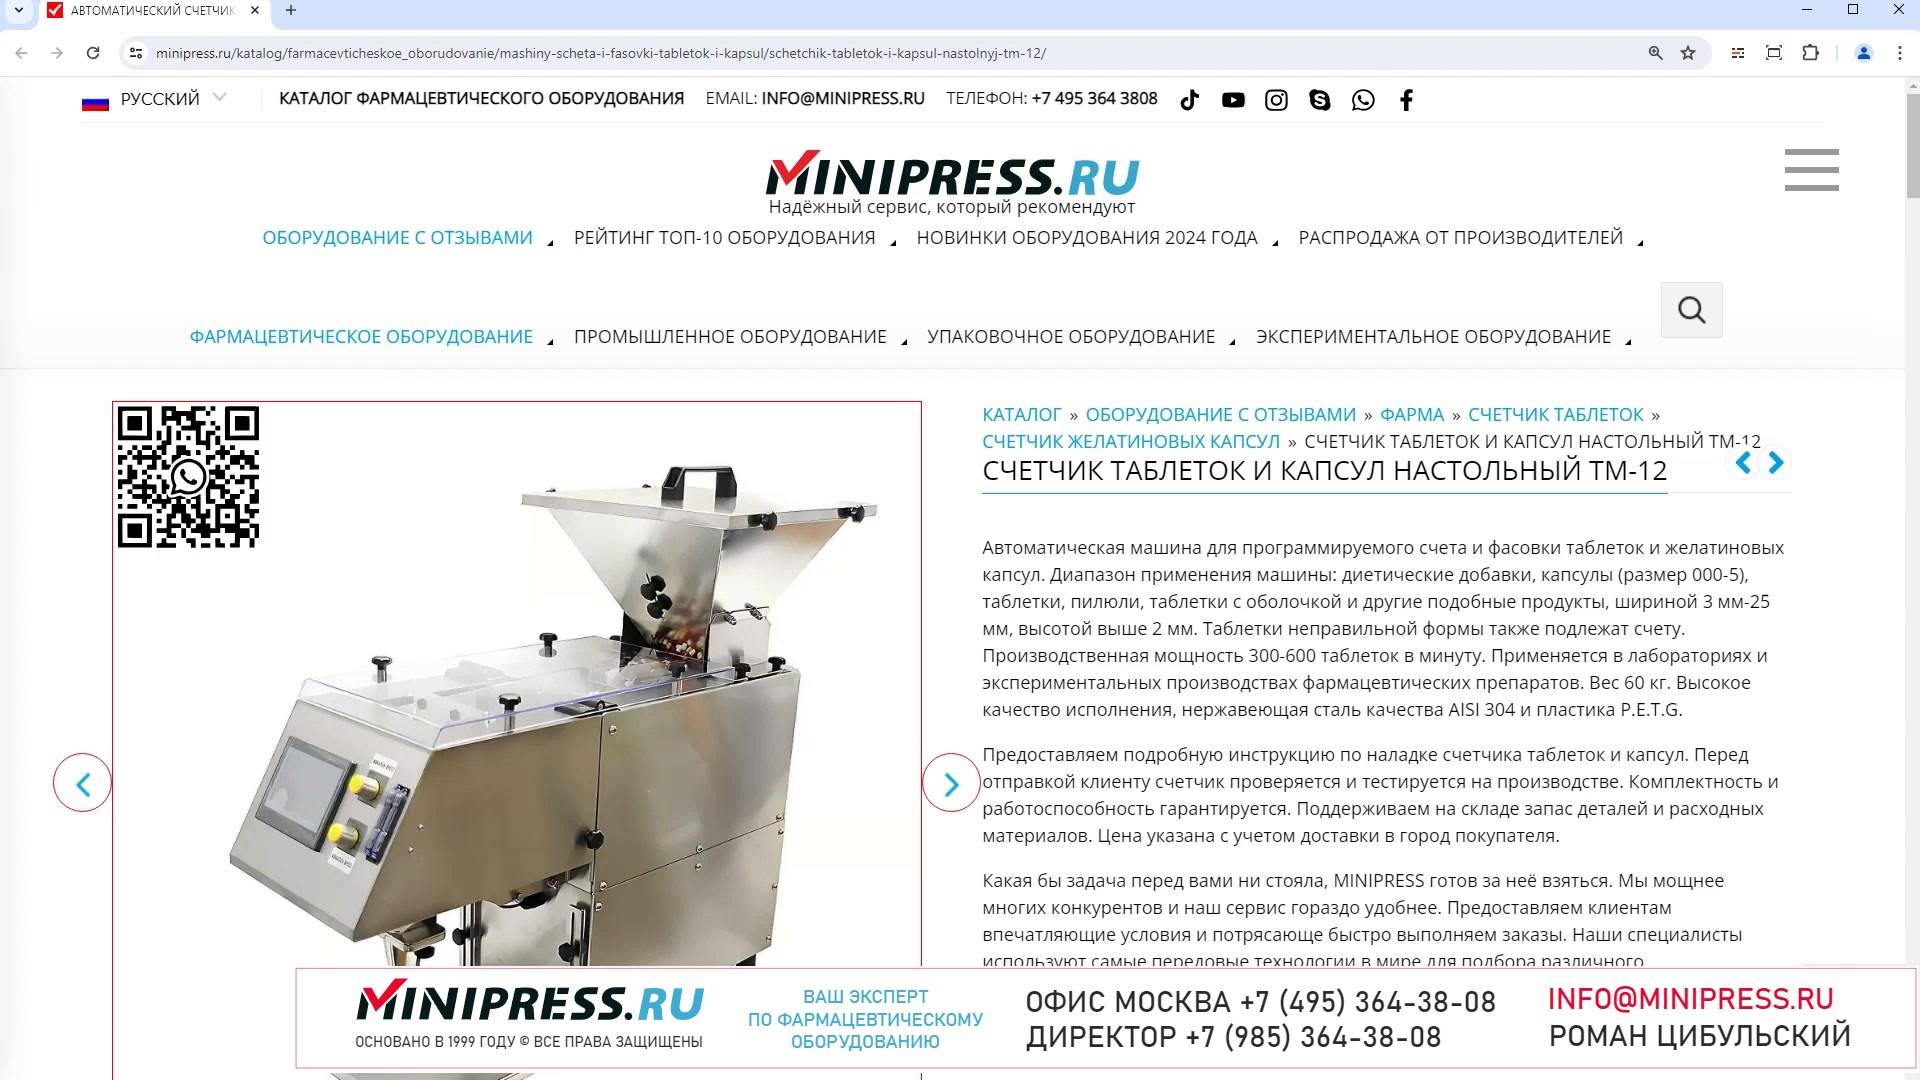 Minipress.ru Счетчик таблеток и капсул настольный TM-12